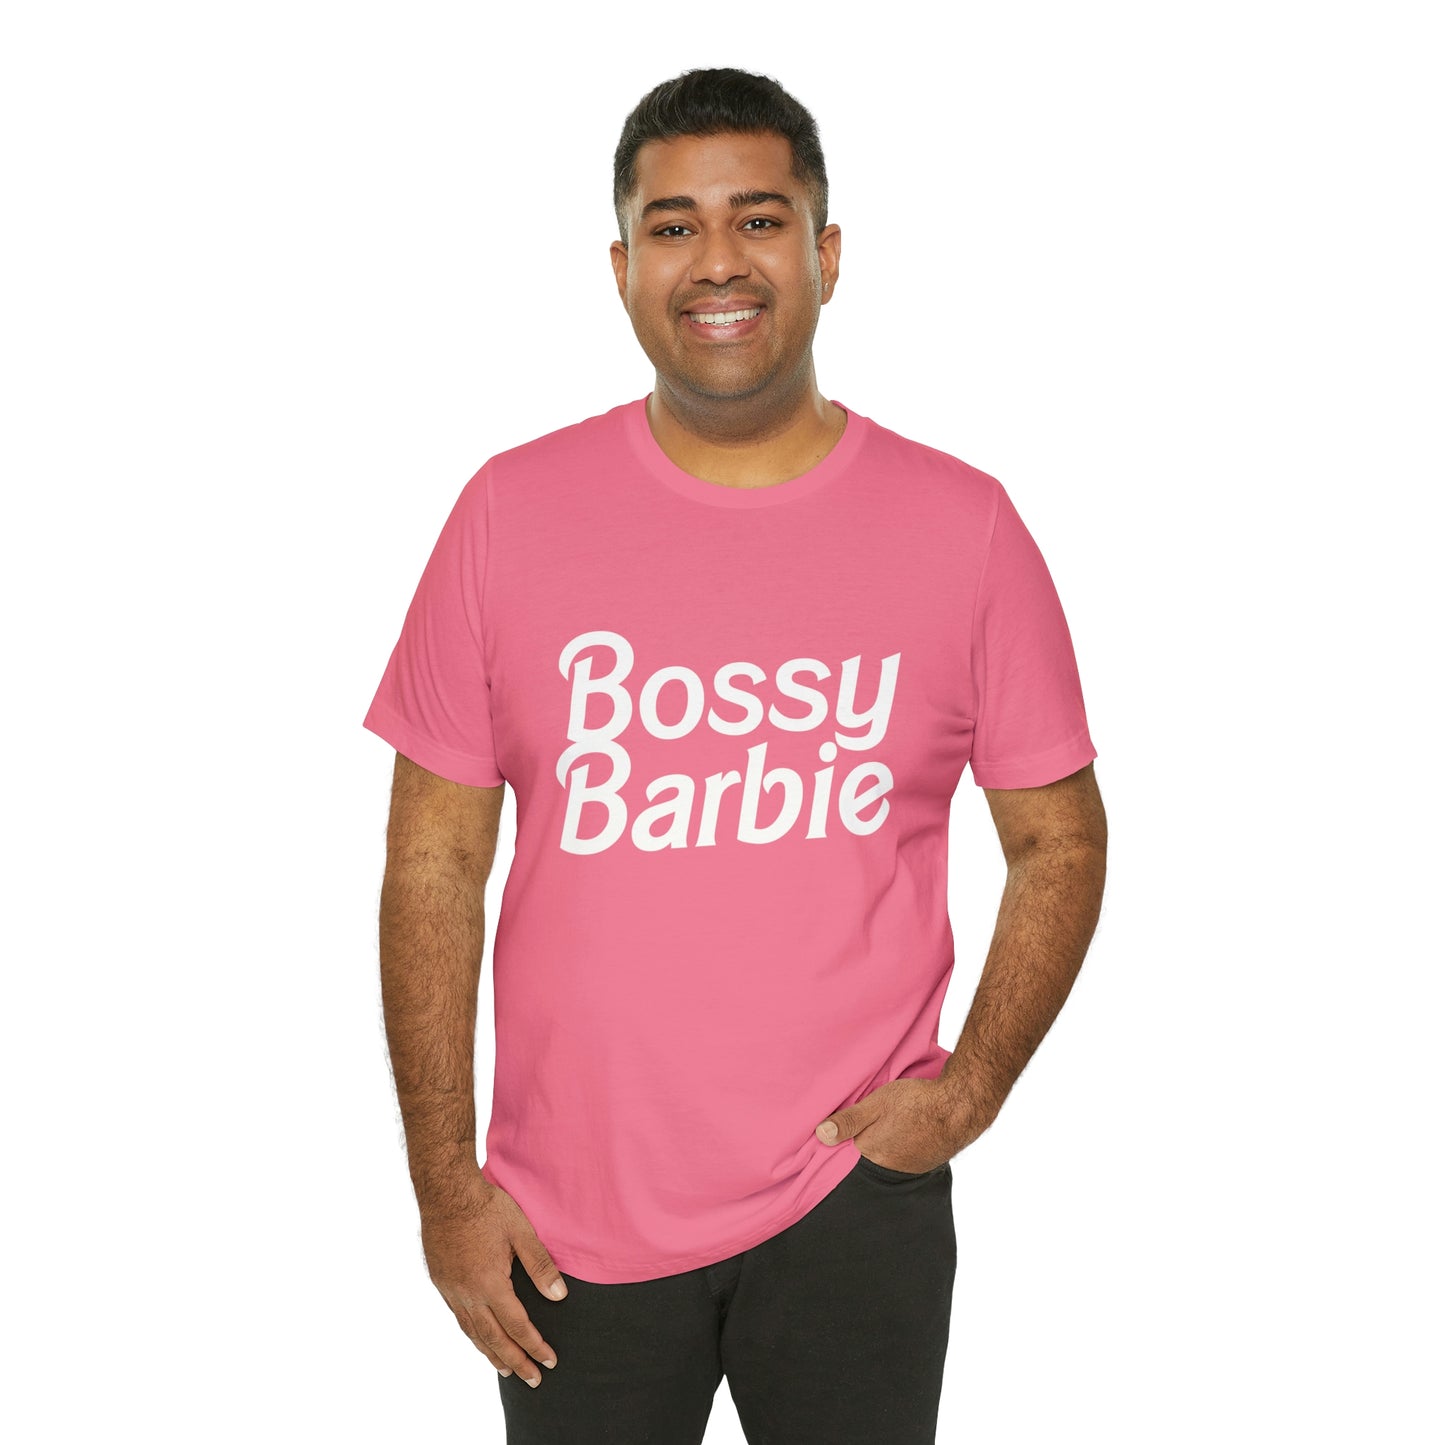 Bossy Barbie